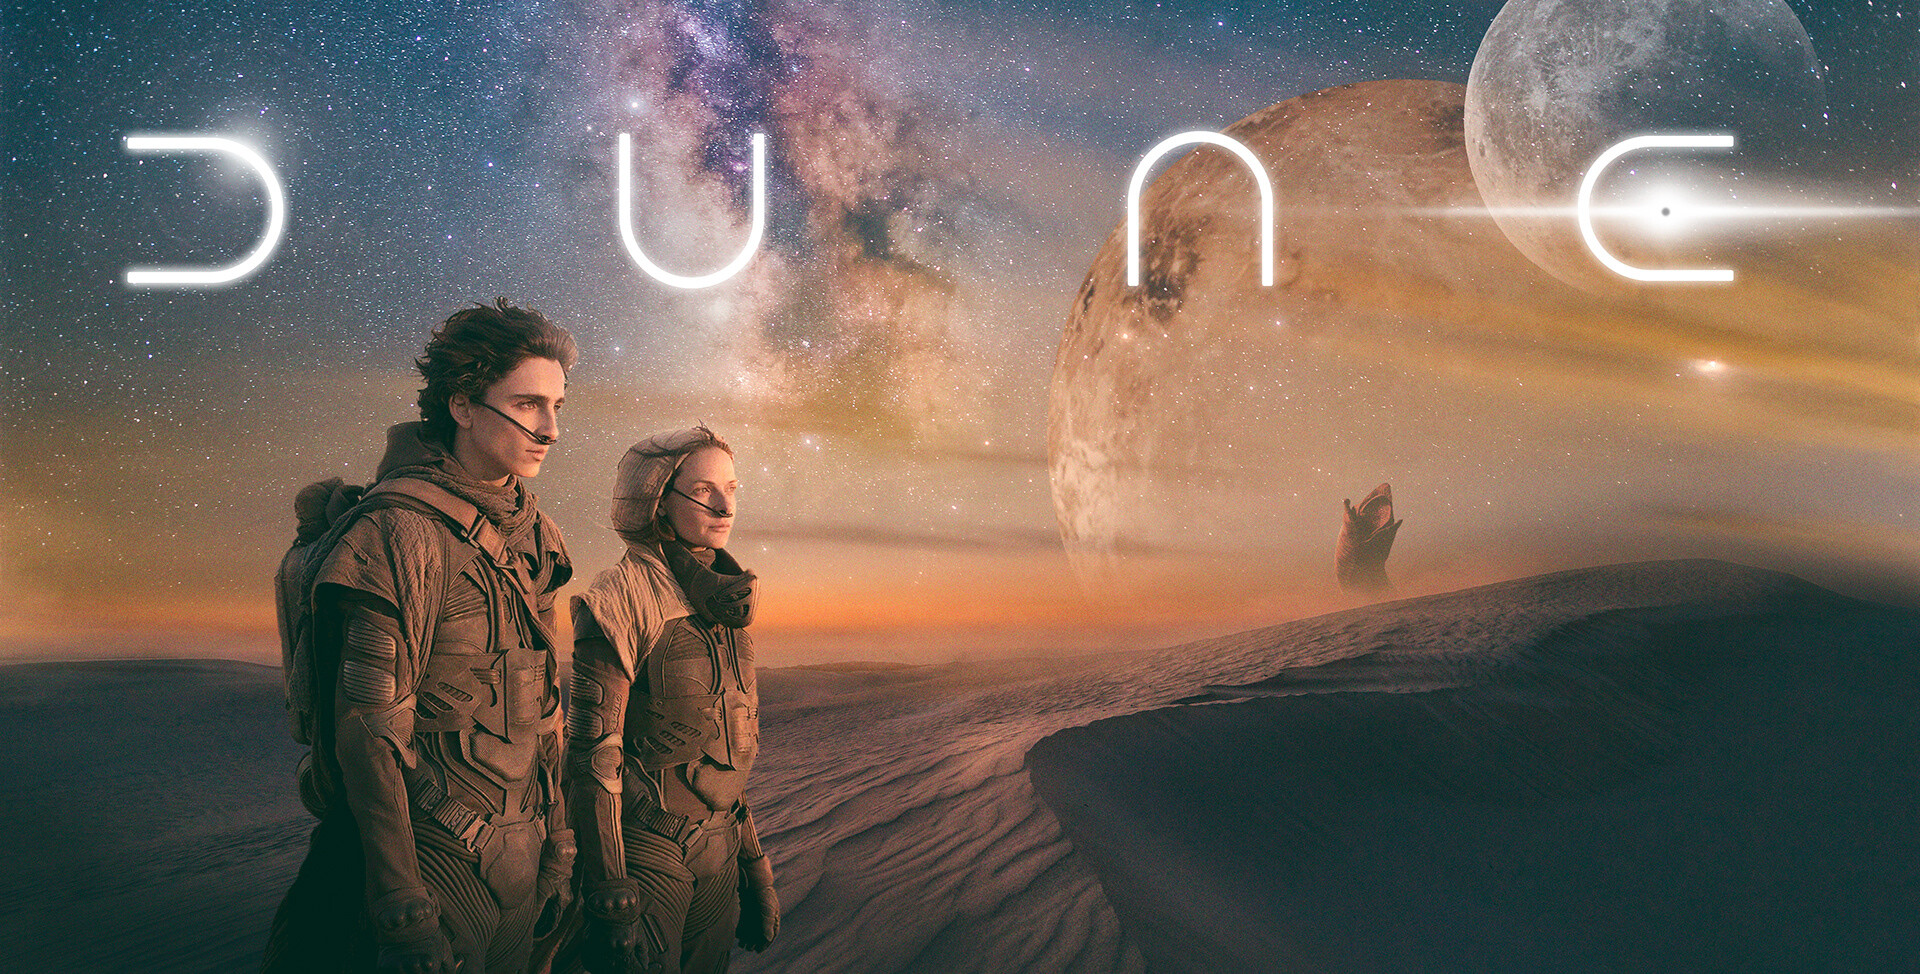 Dune movie poster.